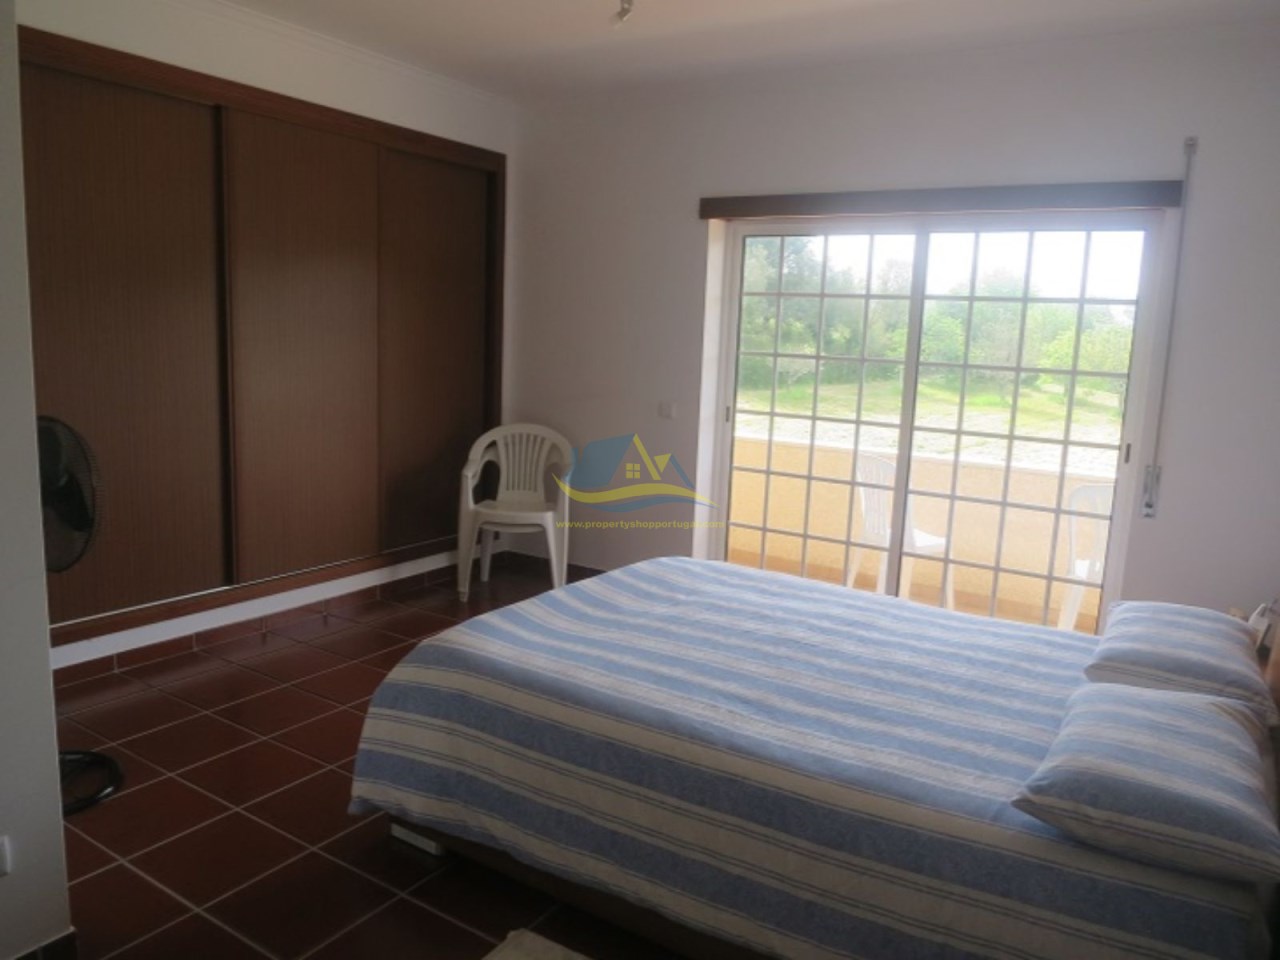 Lovely 4 bedroom villa in private location with stunning views. Vila Nova de Poiares